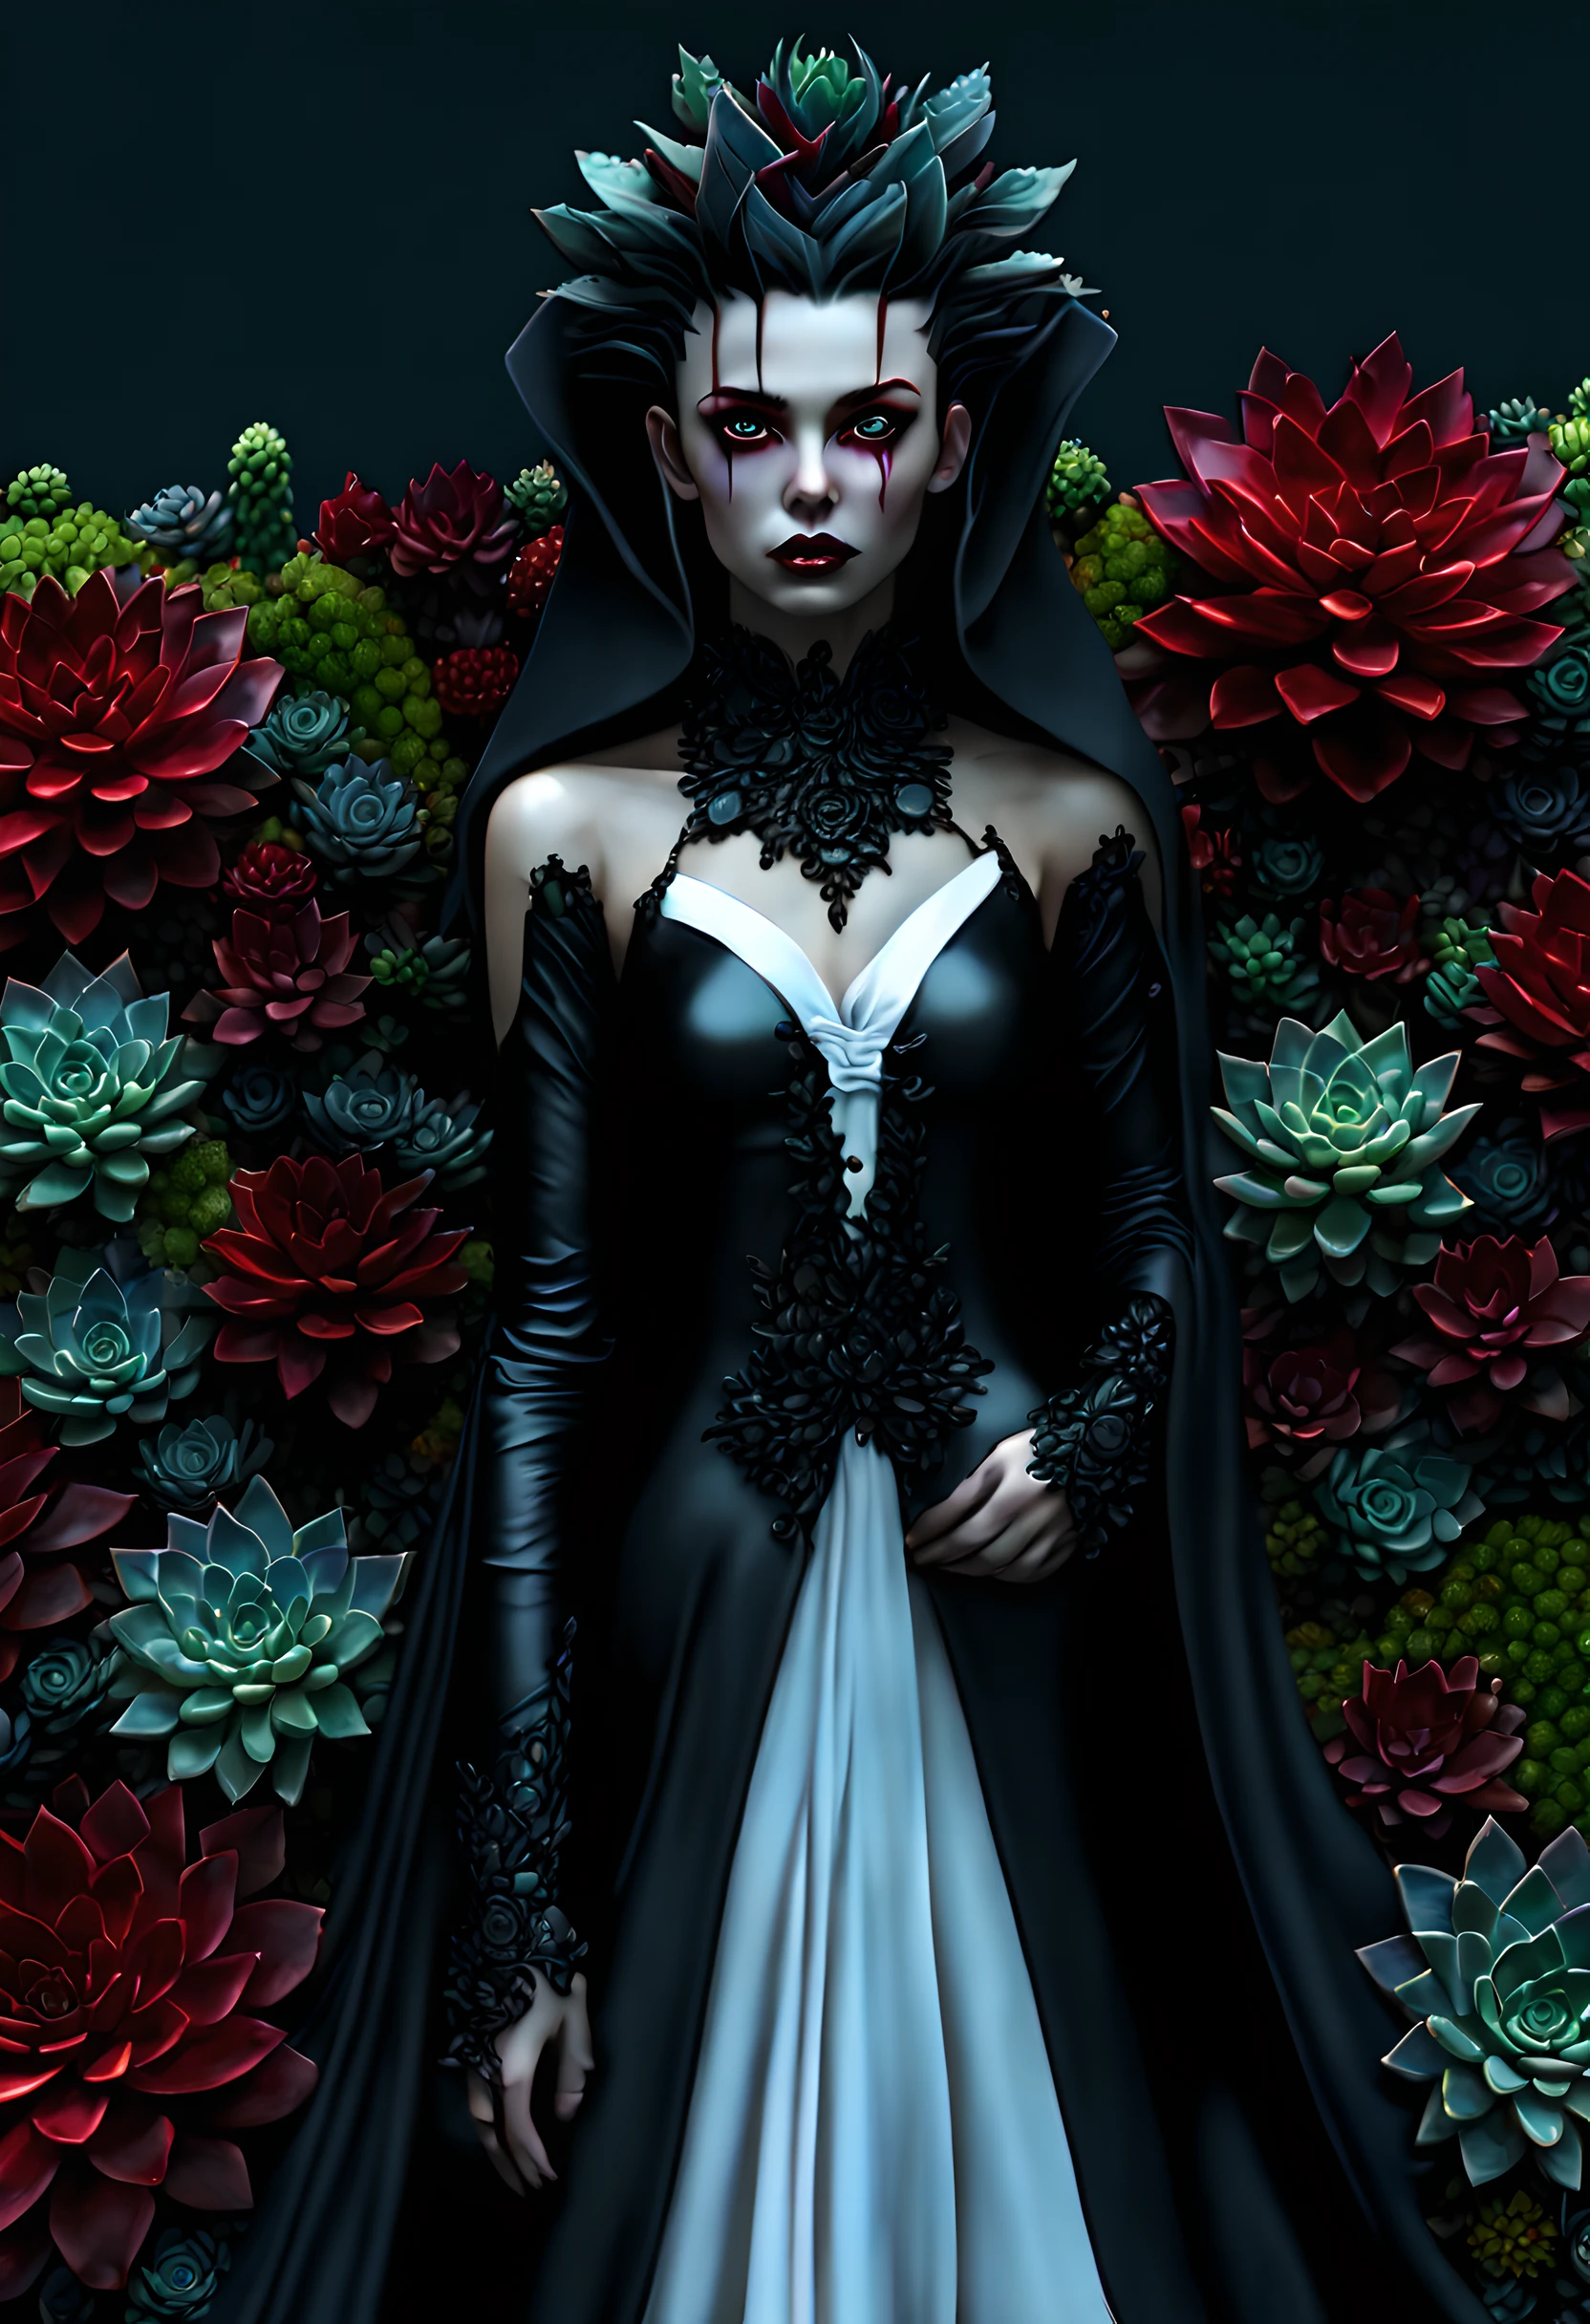 picture of a vampire woman 쉬고있는 a (검은색:1.2) 그리고 (빨간색:1.2) colo빨간색 succulents meadow, 전신, 절묘한 아름다운 (매우 상세한, 걸작, 최고의 품질: 1.4) 여자 뱀파이어 여자, 동적 각도 (가장 상세한, 걸작, 최고의 품질), 매우 상세한 face (매우 상세한, 걸작, 최고의 품질), 극도로 여성스러운, 회색 피부, 금발, 구불 거리는 머리카락, 역동적인 눈 색깔, 차가운 눈, 빛나는 눈, 강렬한 눈빛, dark 빨간색 lips, [송곳니], 흰 드레스를 입고, 우아한 스타일의 드레스 (매우 상세한, 걸작, 최고의 품질), 파란색 망토를 입고 (매우 상세한, 걸작, 최고의 품질), 긴 망토, 흐르는 망토 (매우 상세한, 걸작, 최고의 품질), 하이힐 부츠를 신고, 쉬고있는 (검은색 그리고 빨간색 colo빨간색 succulents meadow: 1.6), 피가 뚝뚝 떨어지는 다육식물, full colo빨간색, (완벽한 스펙트럼: 1.3),( 활기찬 작품: 1.4) vibrant shades of 빨간색, 그리고 검은색) 달이 뜨다, 달빛, 밤이야, 높은 세부 사항, 판타지 아트, RPG art 최고의 품질, 16,000, [매우 상세한], 걸작, 최고의 품질, (매우 상세한), 전신, 울트라 와이드 샷, 사실적인, 길드 전쟁